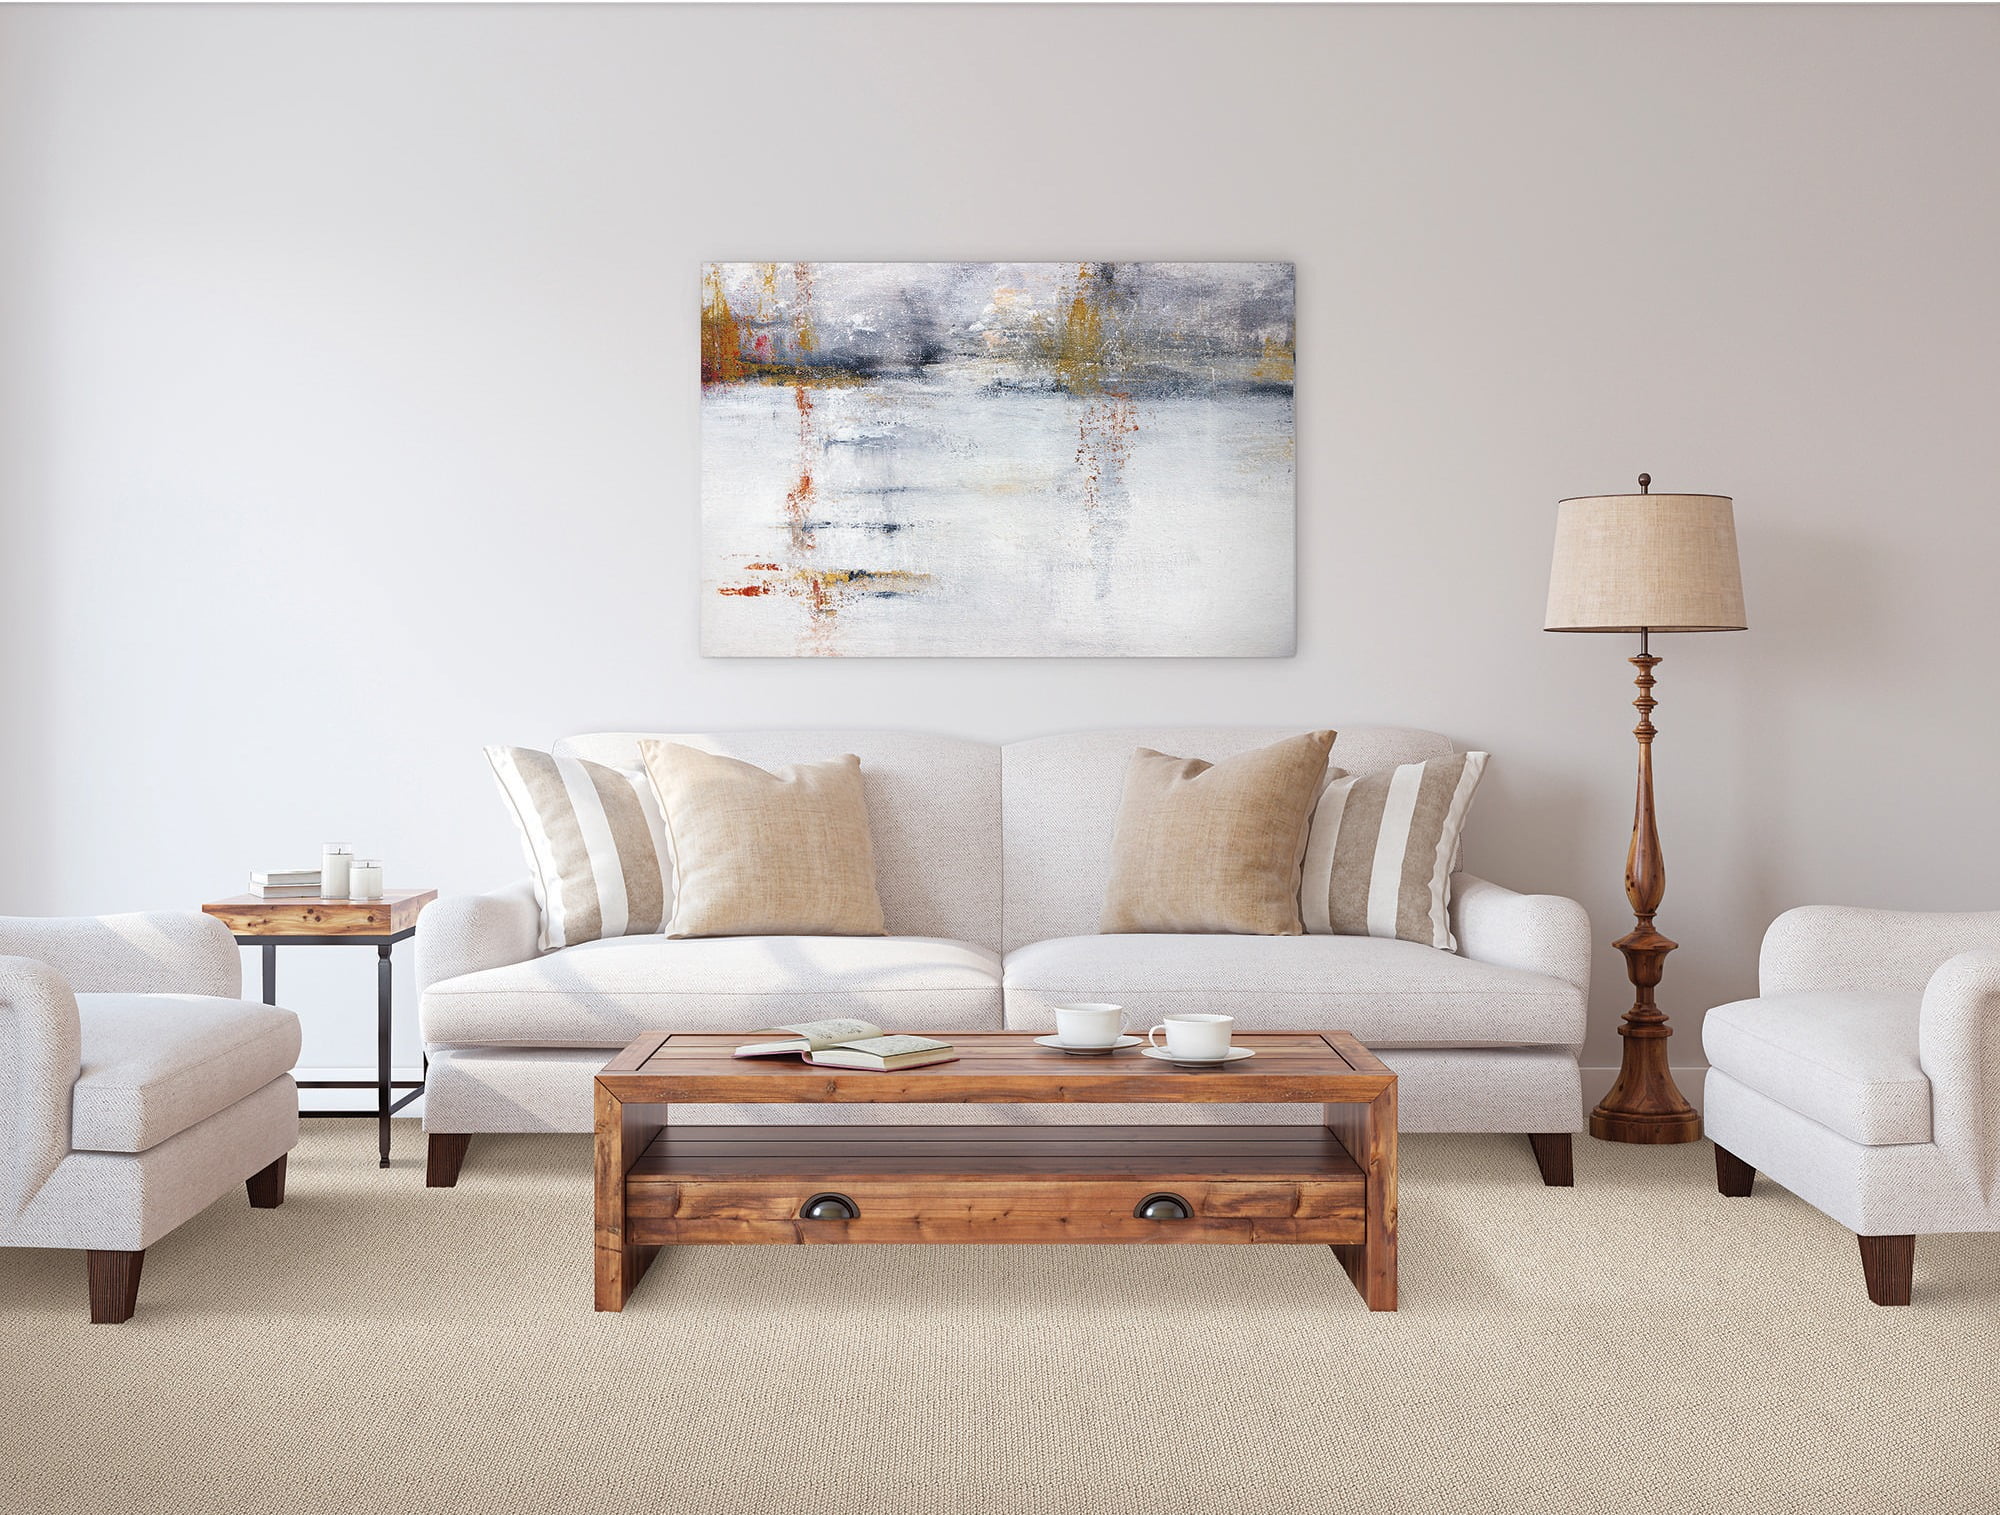 Interior design, Furniture, Table, White, Wood, Rectangle, Comfort, Lighting, Grey, Floor